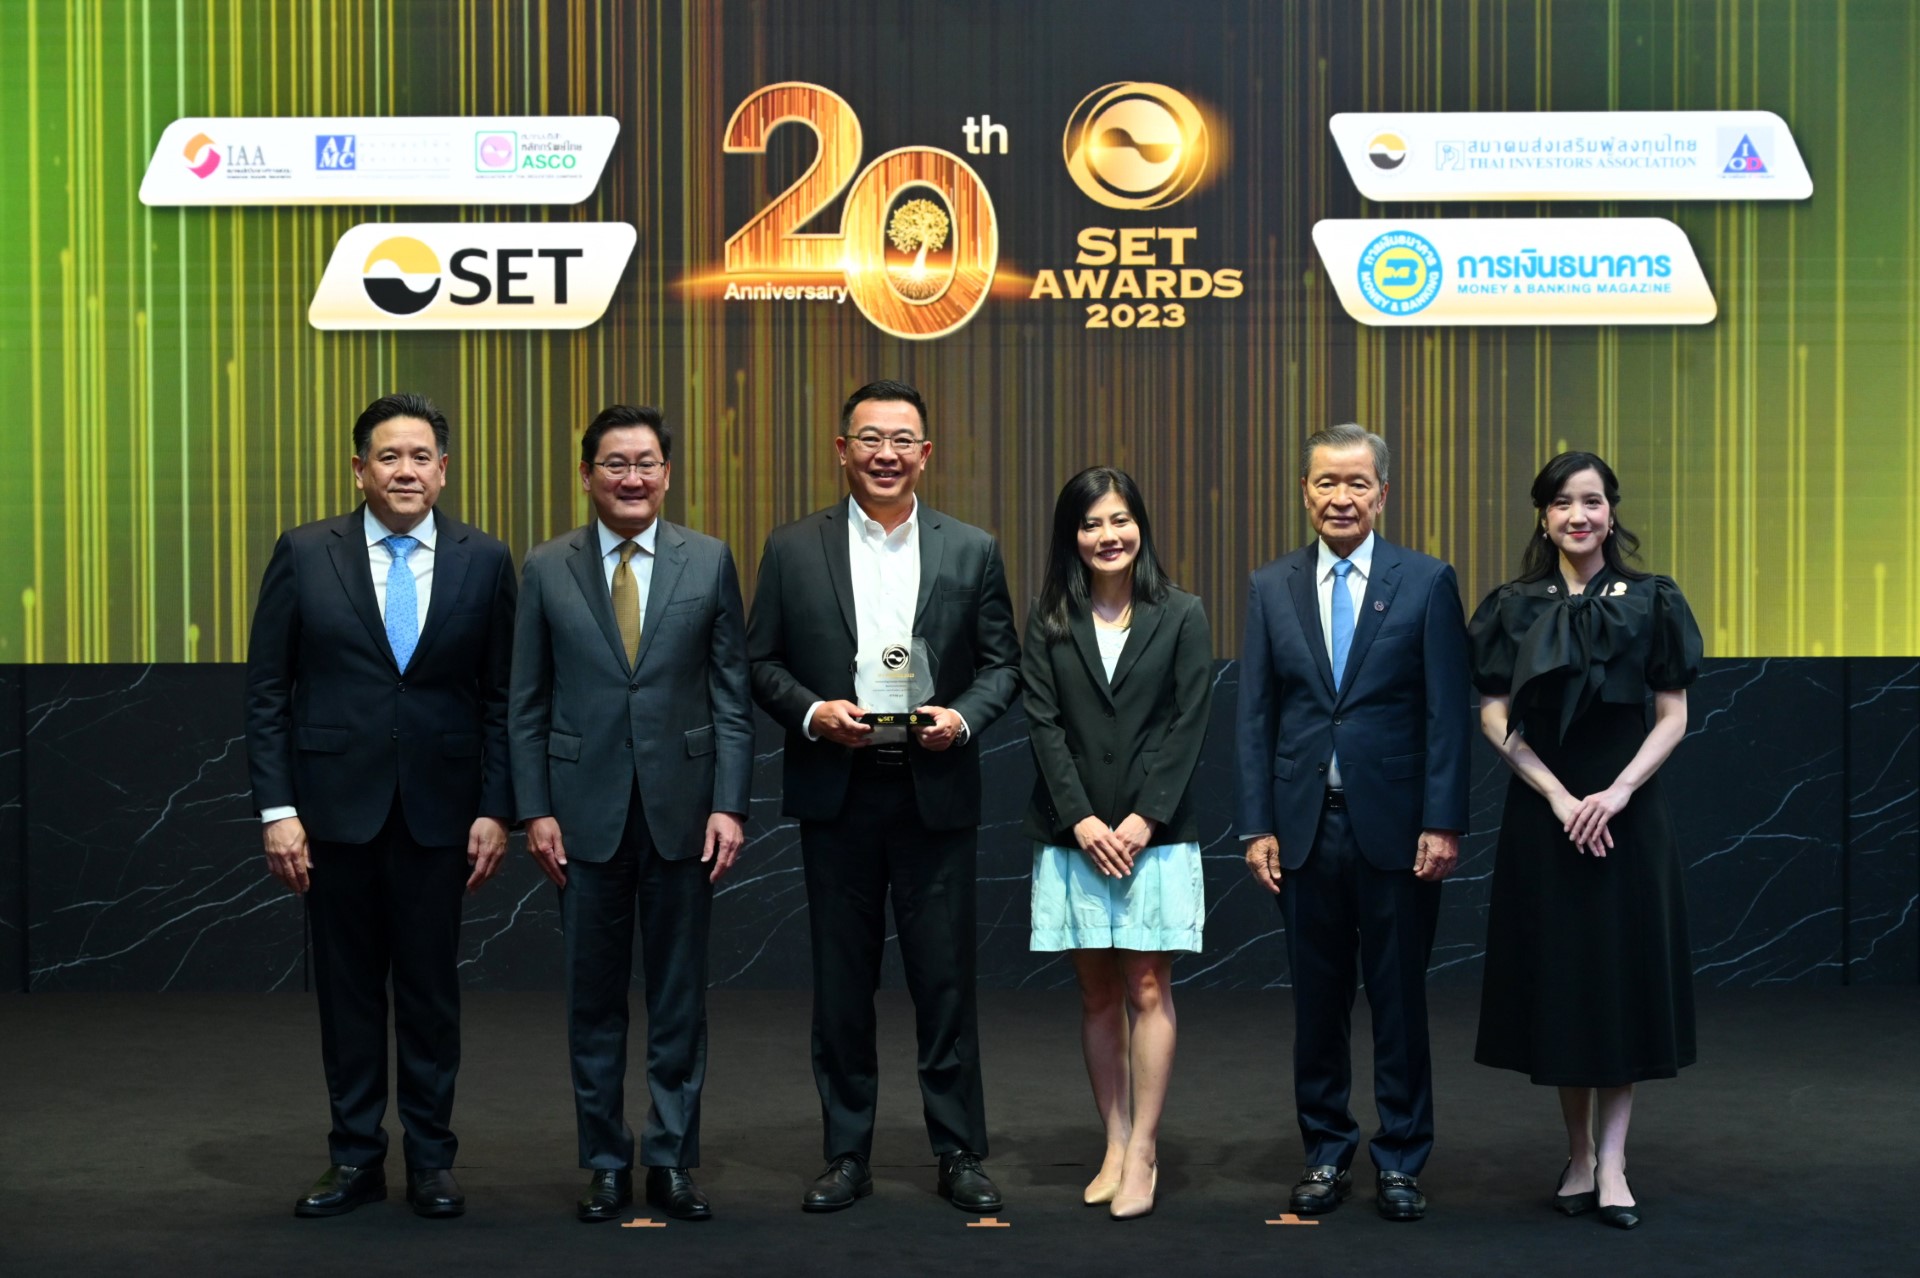 ATP30 คว้า Outstanding Investor Relations Awards 3 ปีซ้อนในงาน SET Awards 2023